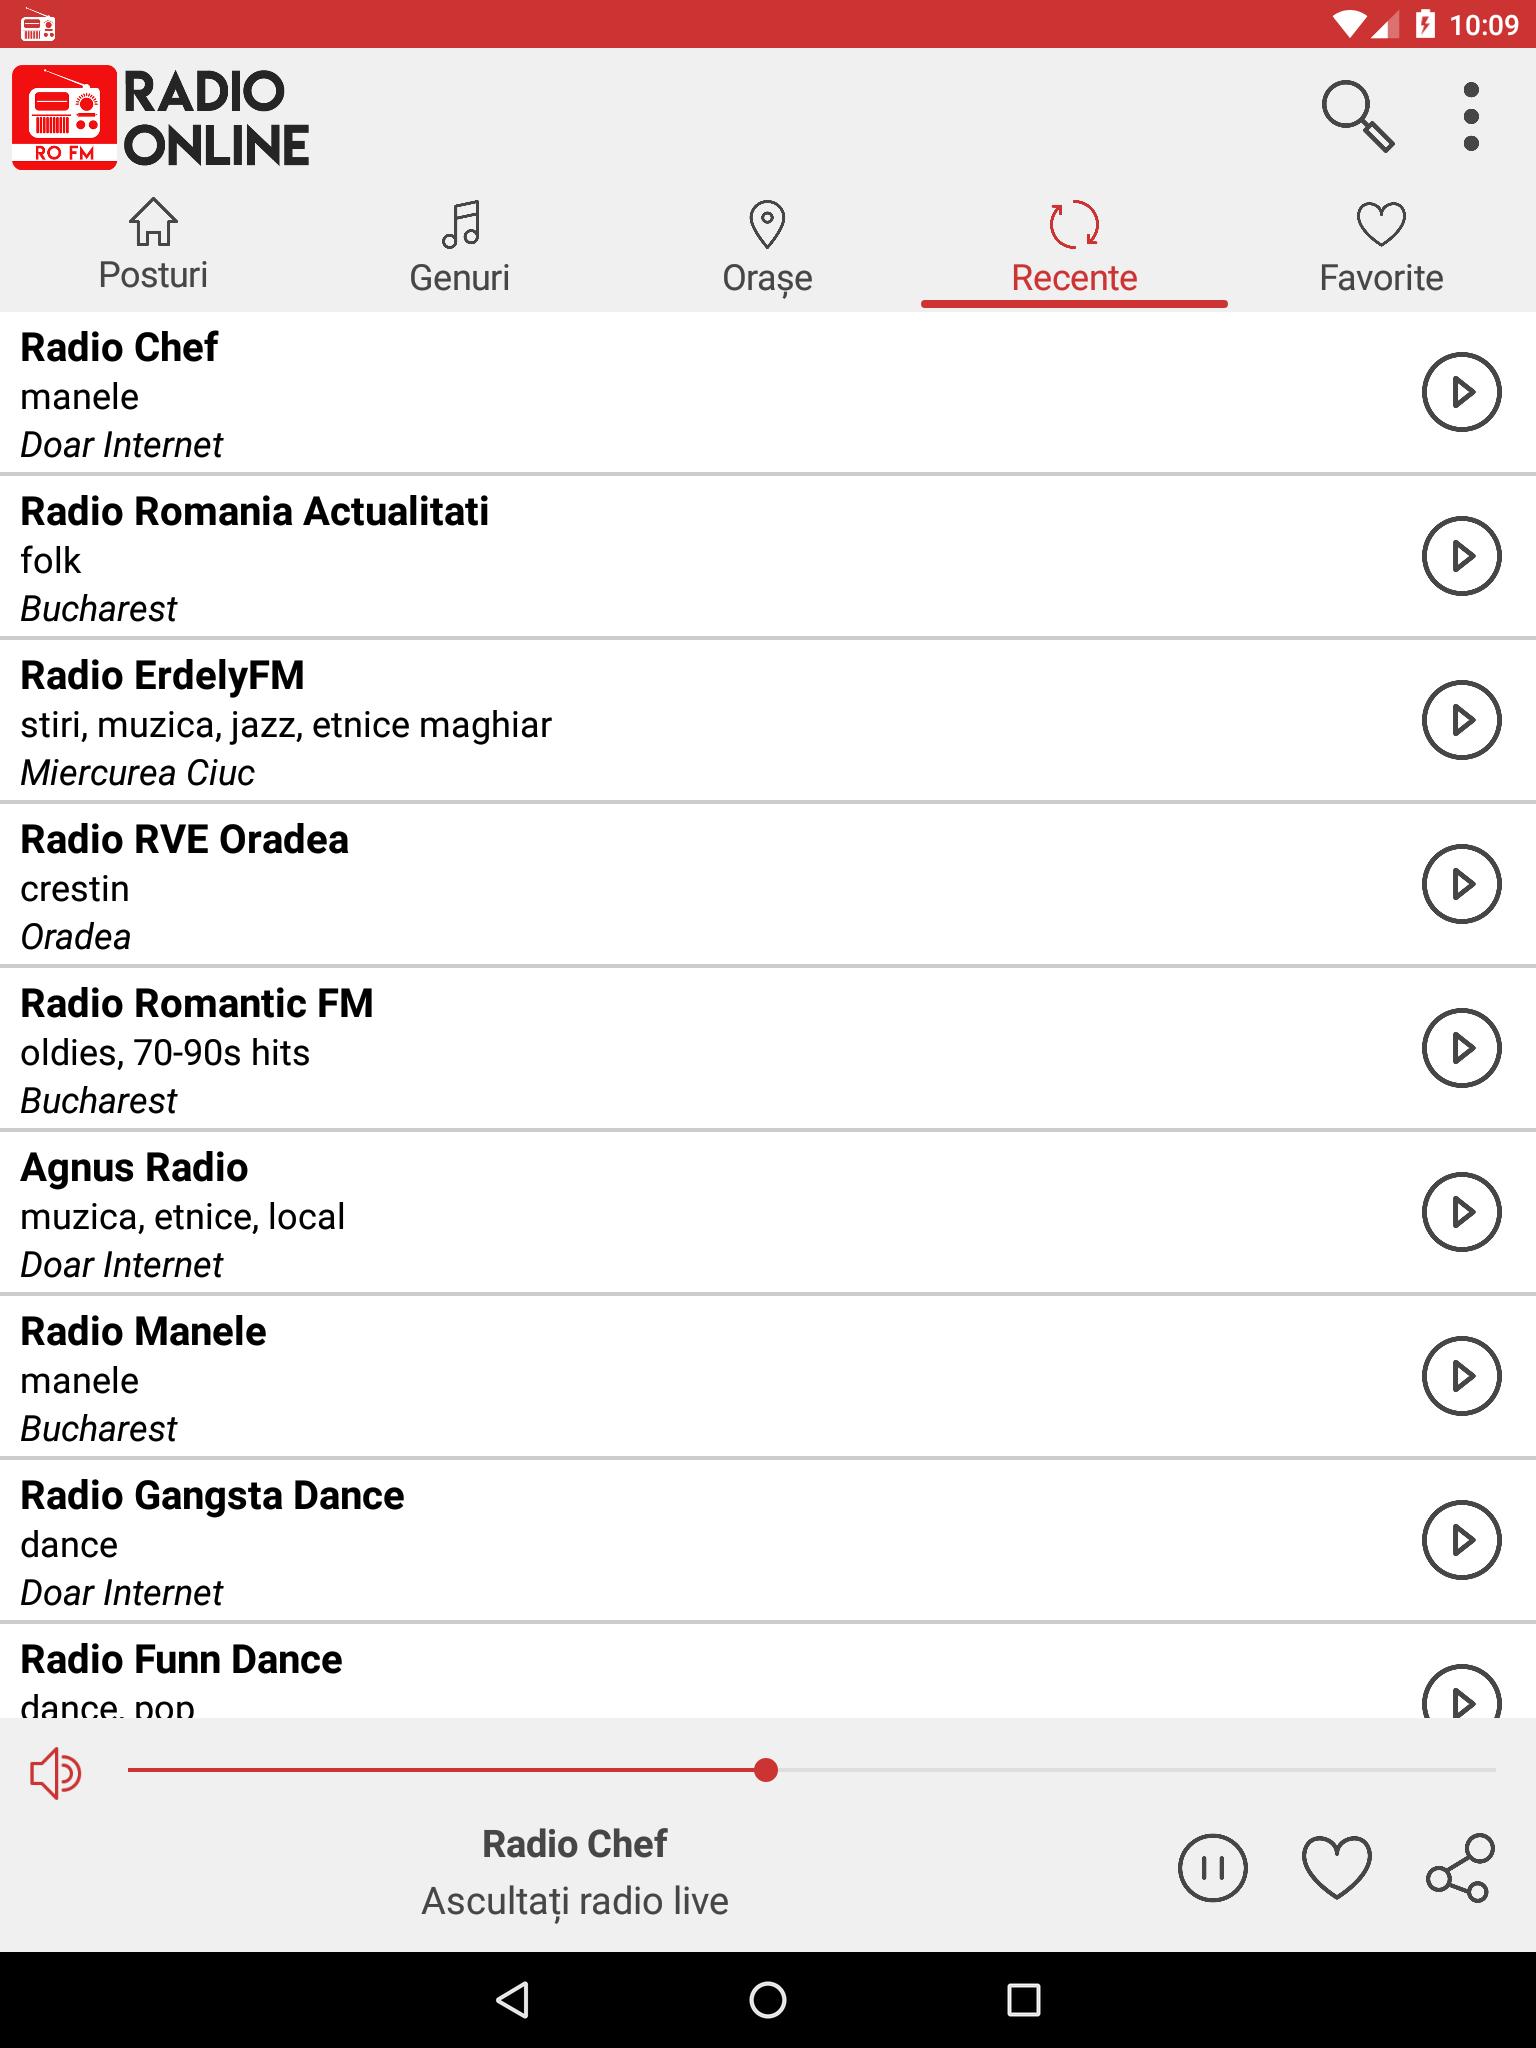 Radio Online Romania Listen To Live Fm Radio For Android Apk